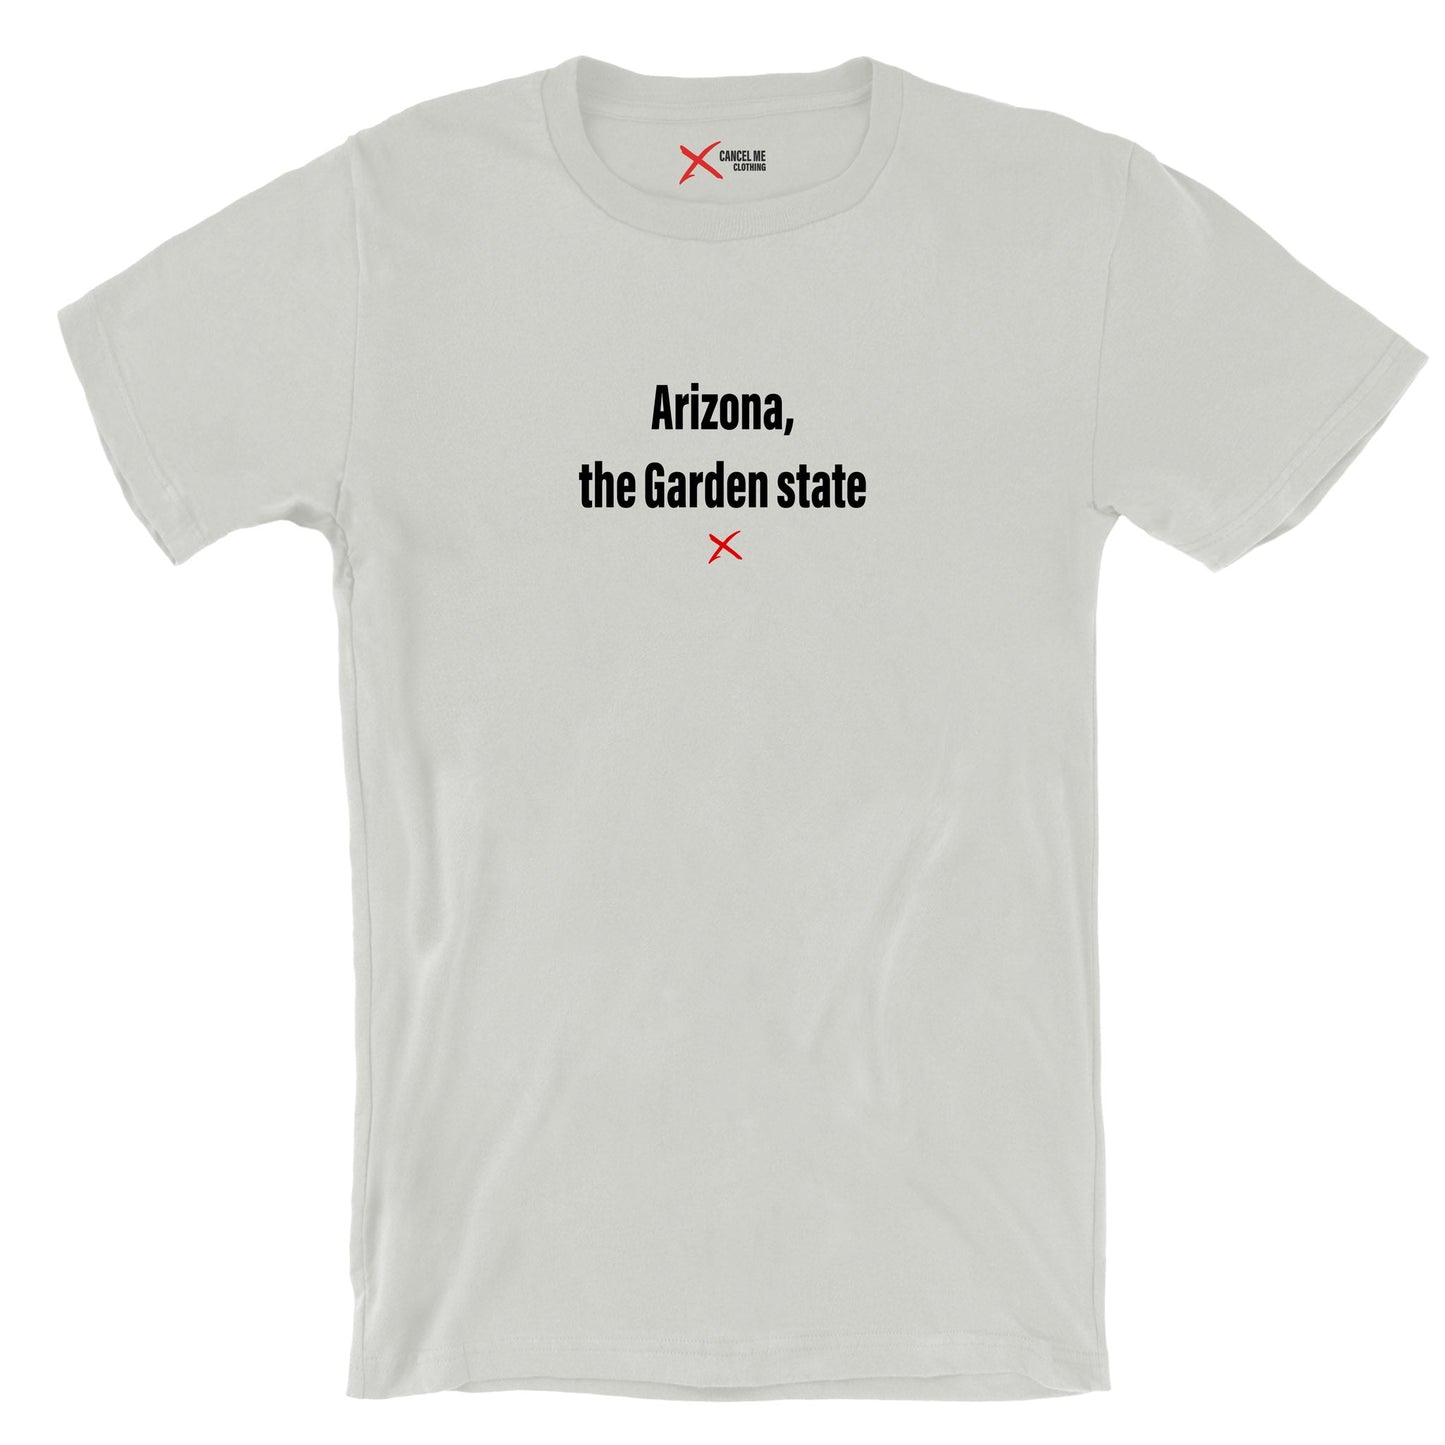 Arizona, the Garden state - Shirt